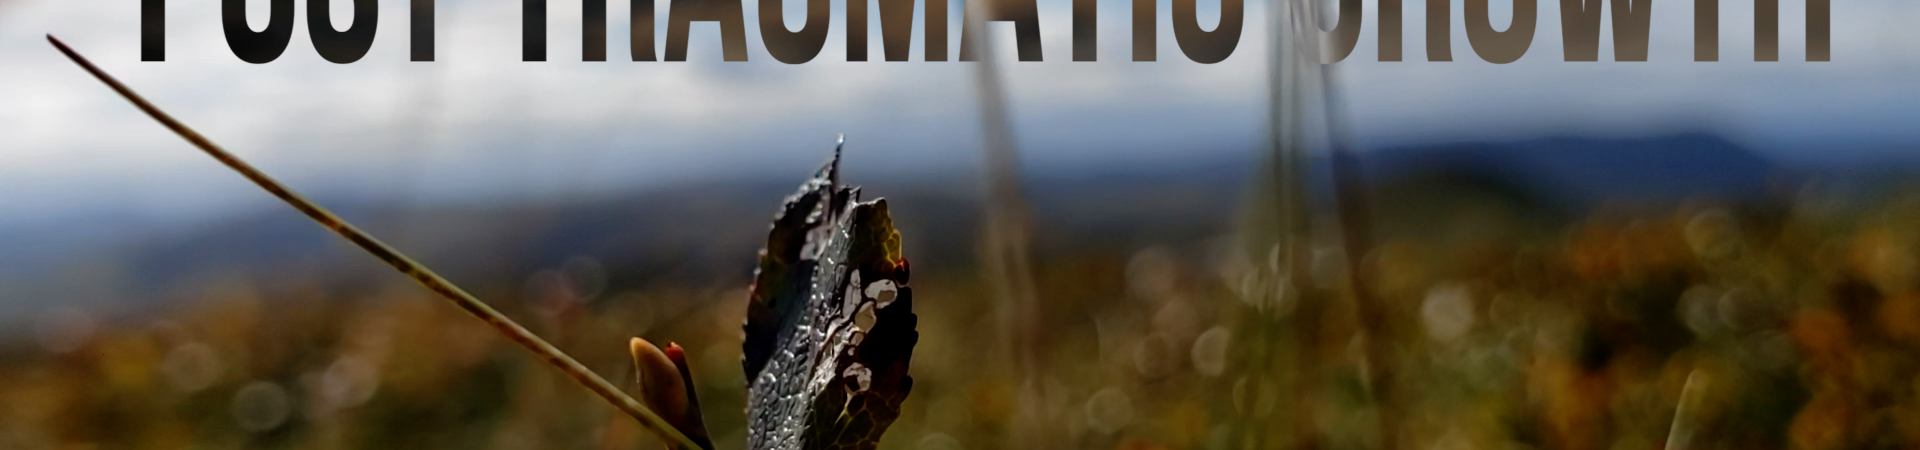 Post Traumatic… Growth?! A Short Musical Documentary